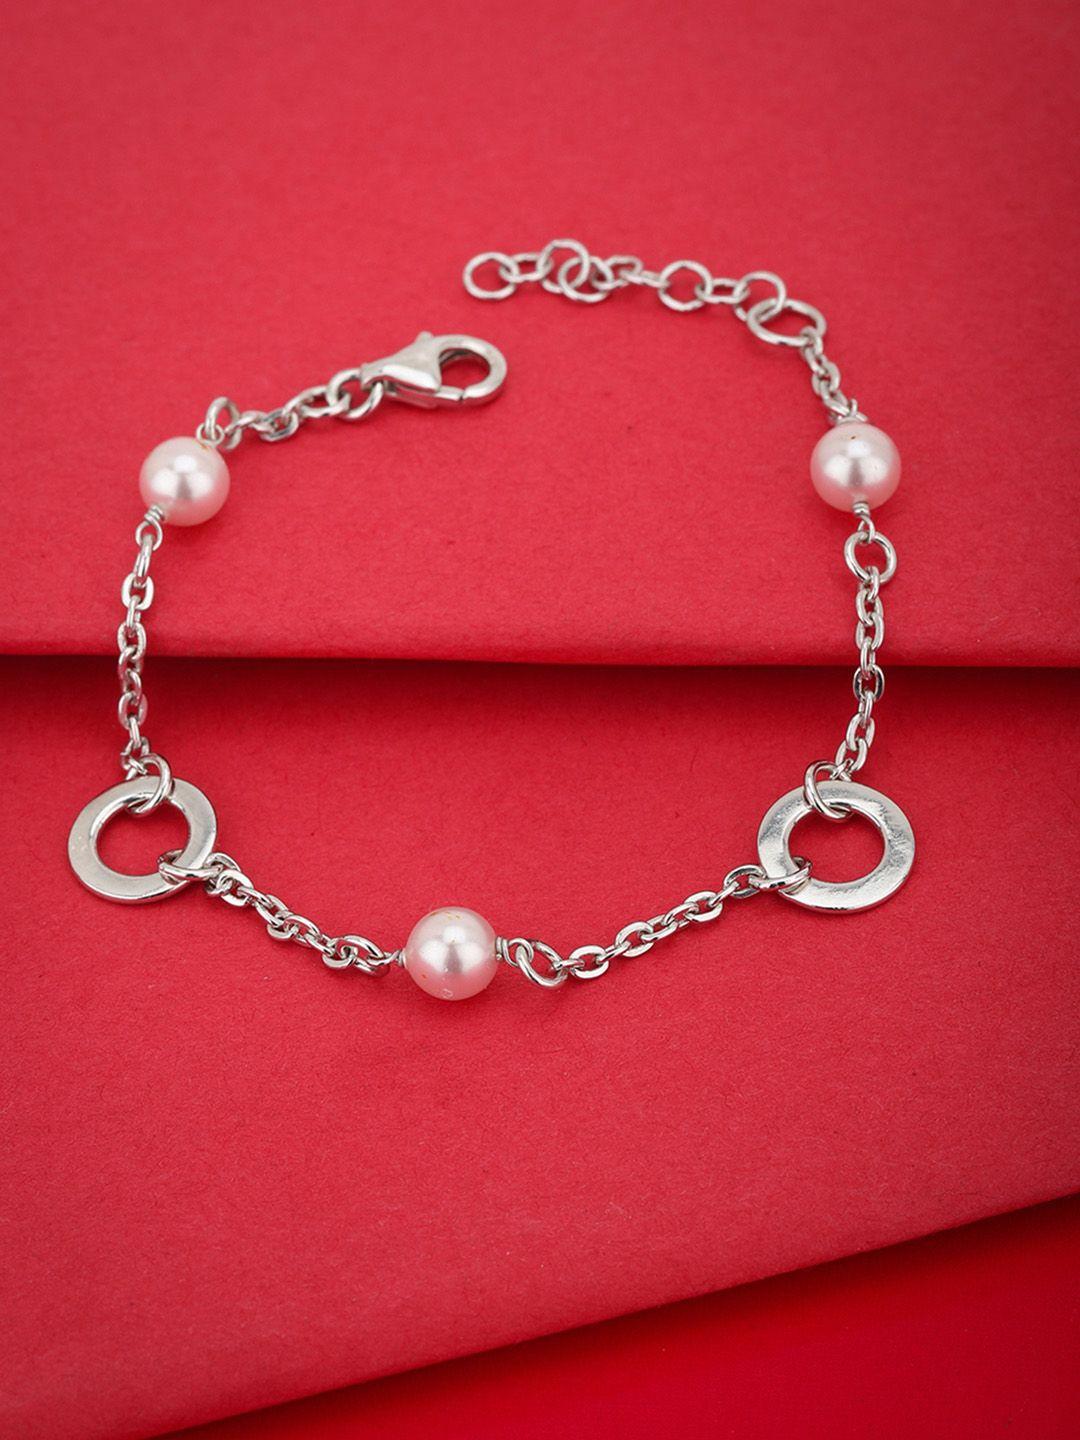 carlton london silver-toned & light pink rhodium-plated beaded link bracelet